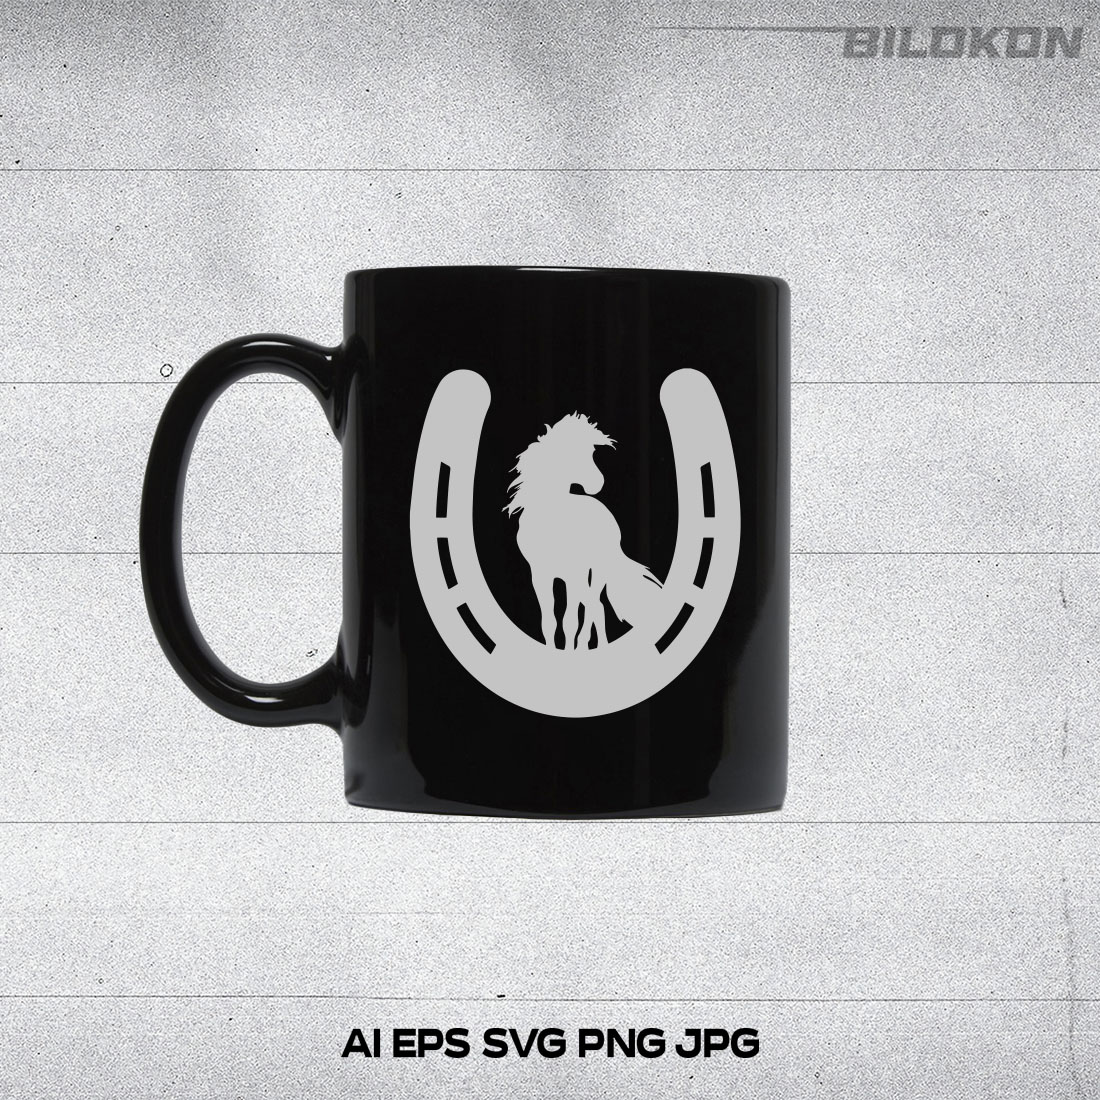 Black coffee mug with a horse on it.